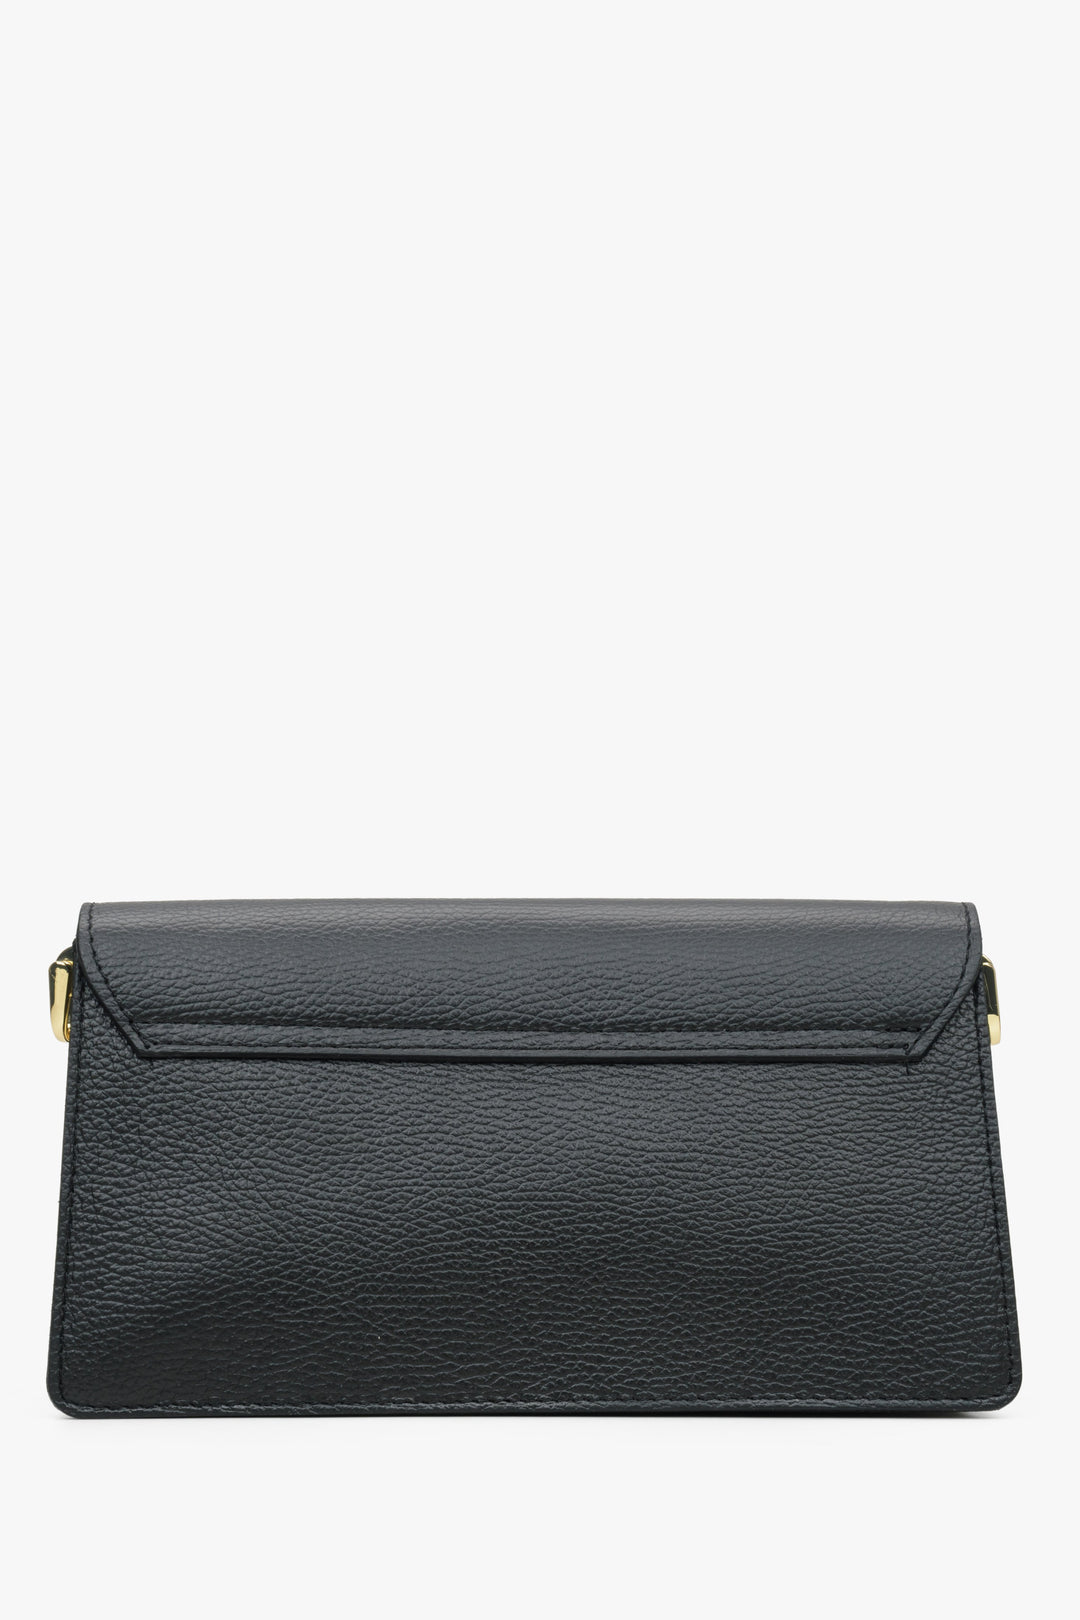 Estro women's black handbag made of Italian genuine leather - close-up on the back of the model.